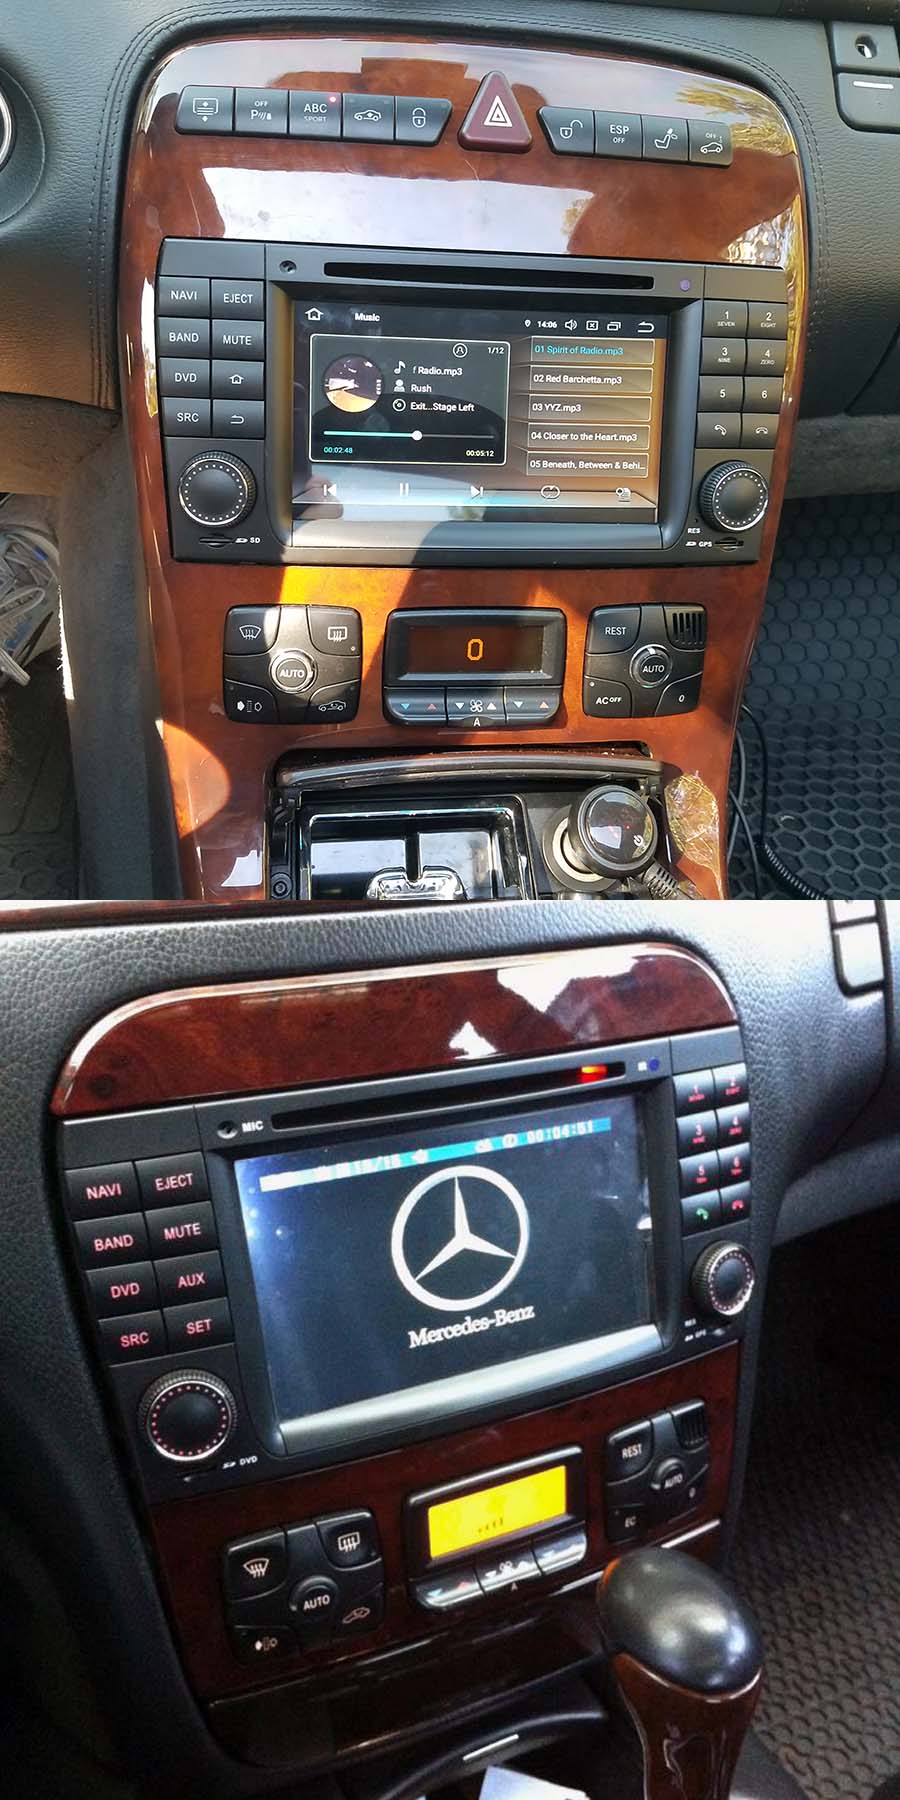 03-06 Mercedes W215 CL500 S430 S55 AMG Head Unit Command Navigation GPS CD Audio